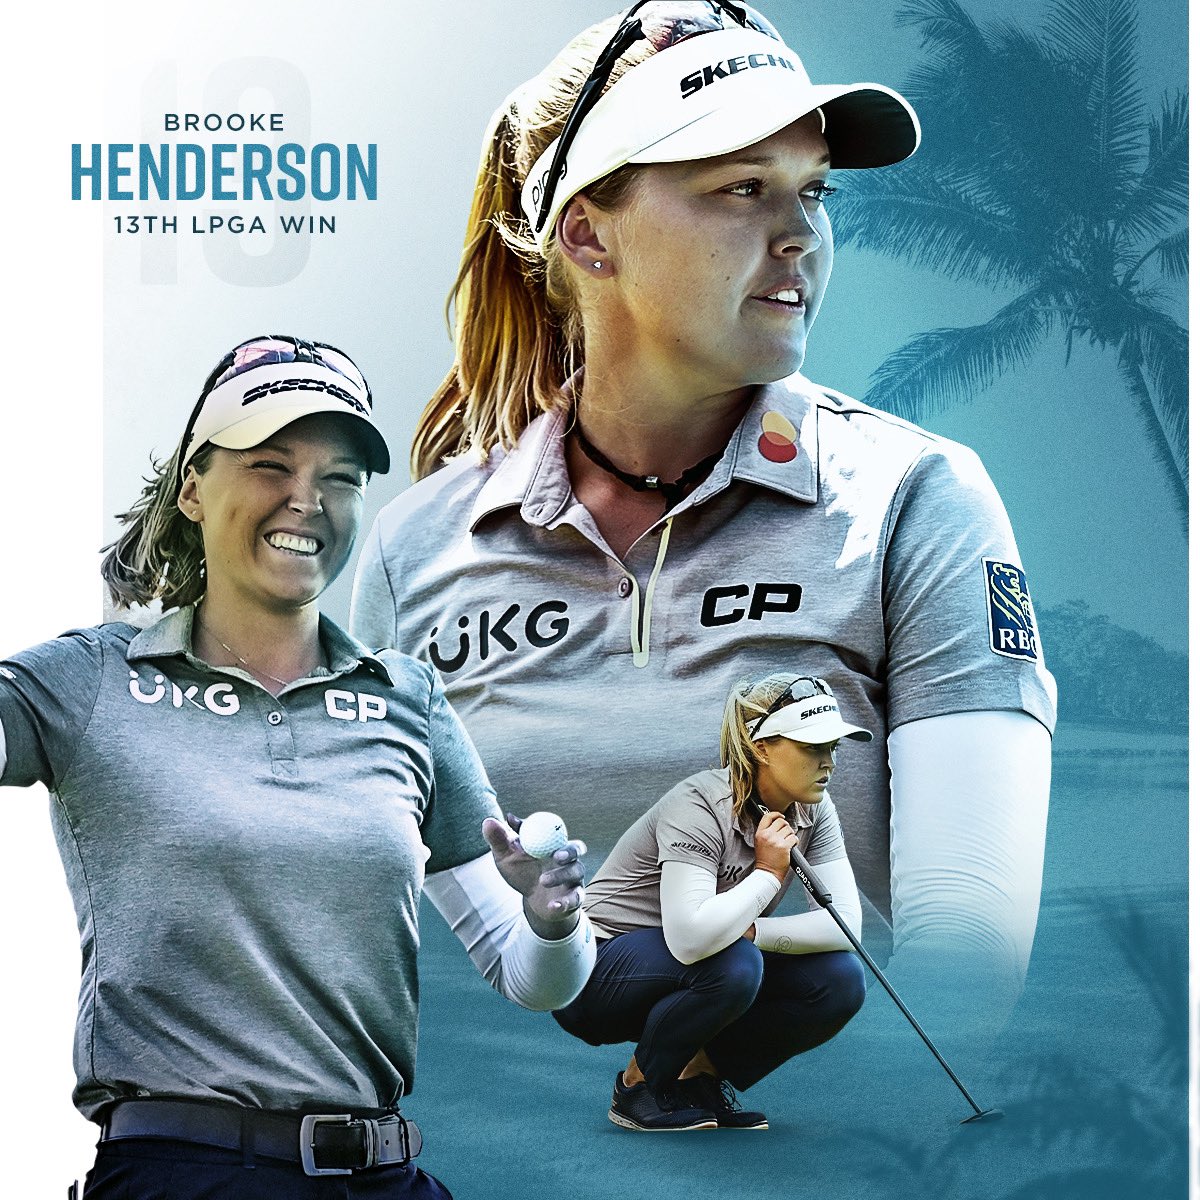 Congratulations to Brooke Henderson! 3/51

.
.
.
#spitzdesignchallenge #sportsdesigns #branding #brandingidentity #design #designchallenge #golfinstagram #gridsystem #graphicdesigning #freelancedesigner #golf #graphicdesigns #lpga